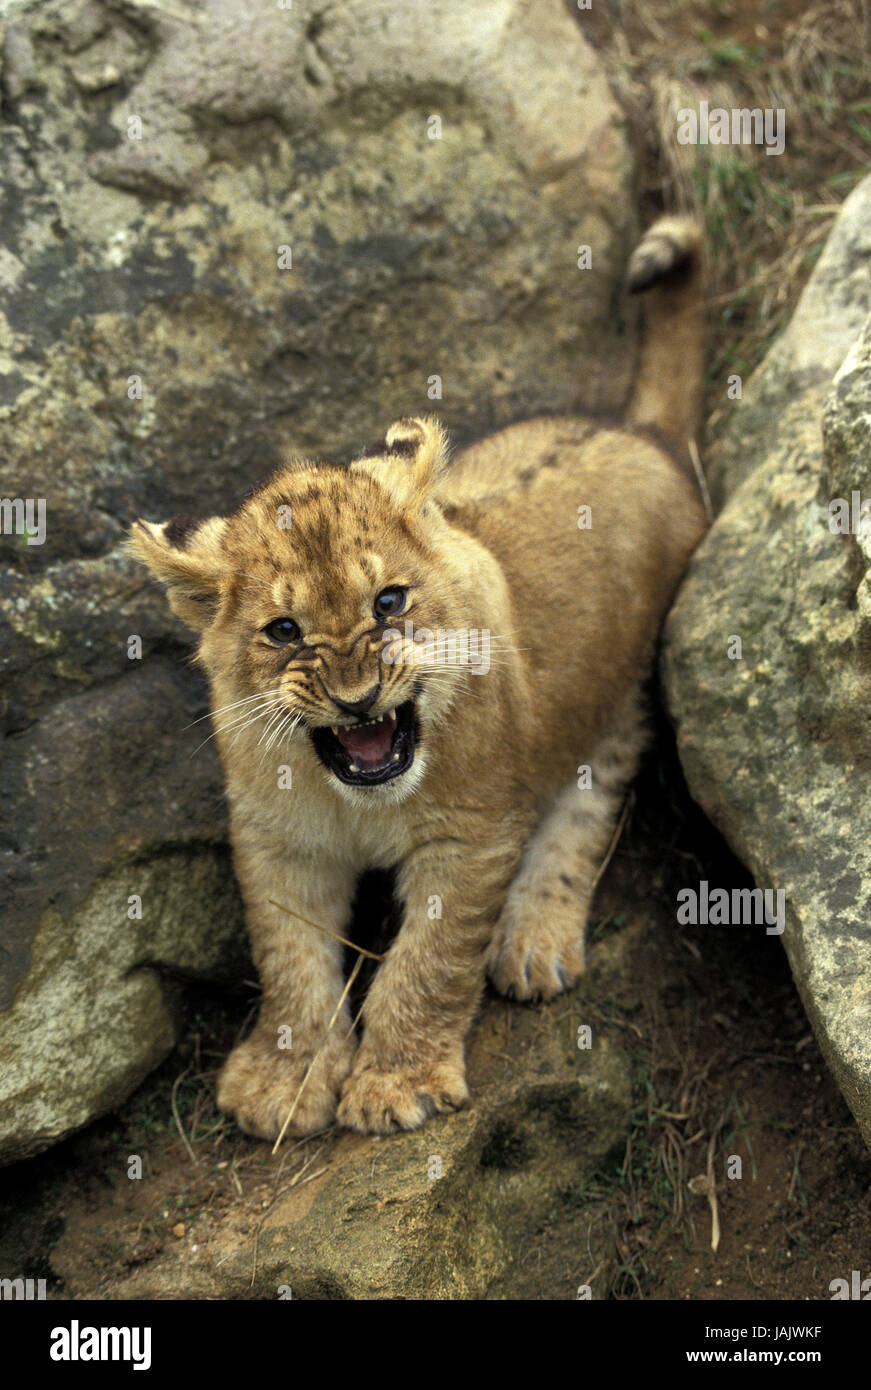 Lion,Panthera leo,giovane animale,sbadiglio, Foto Stock